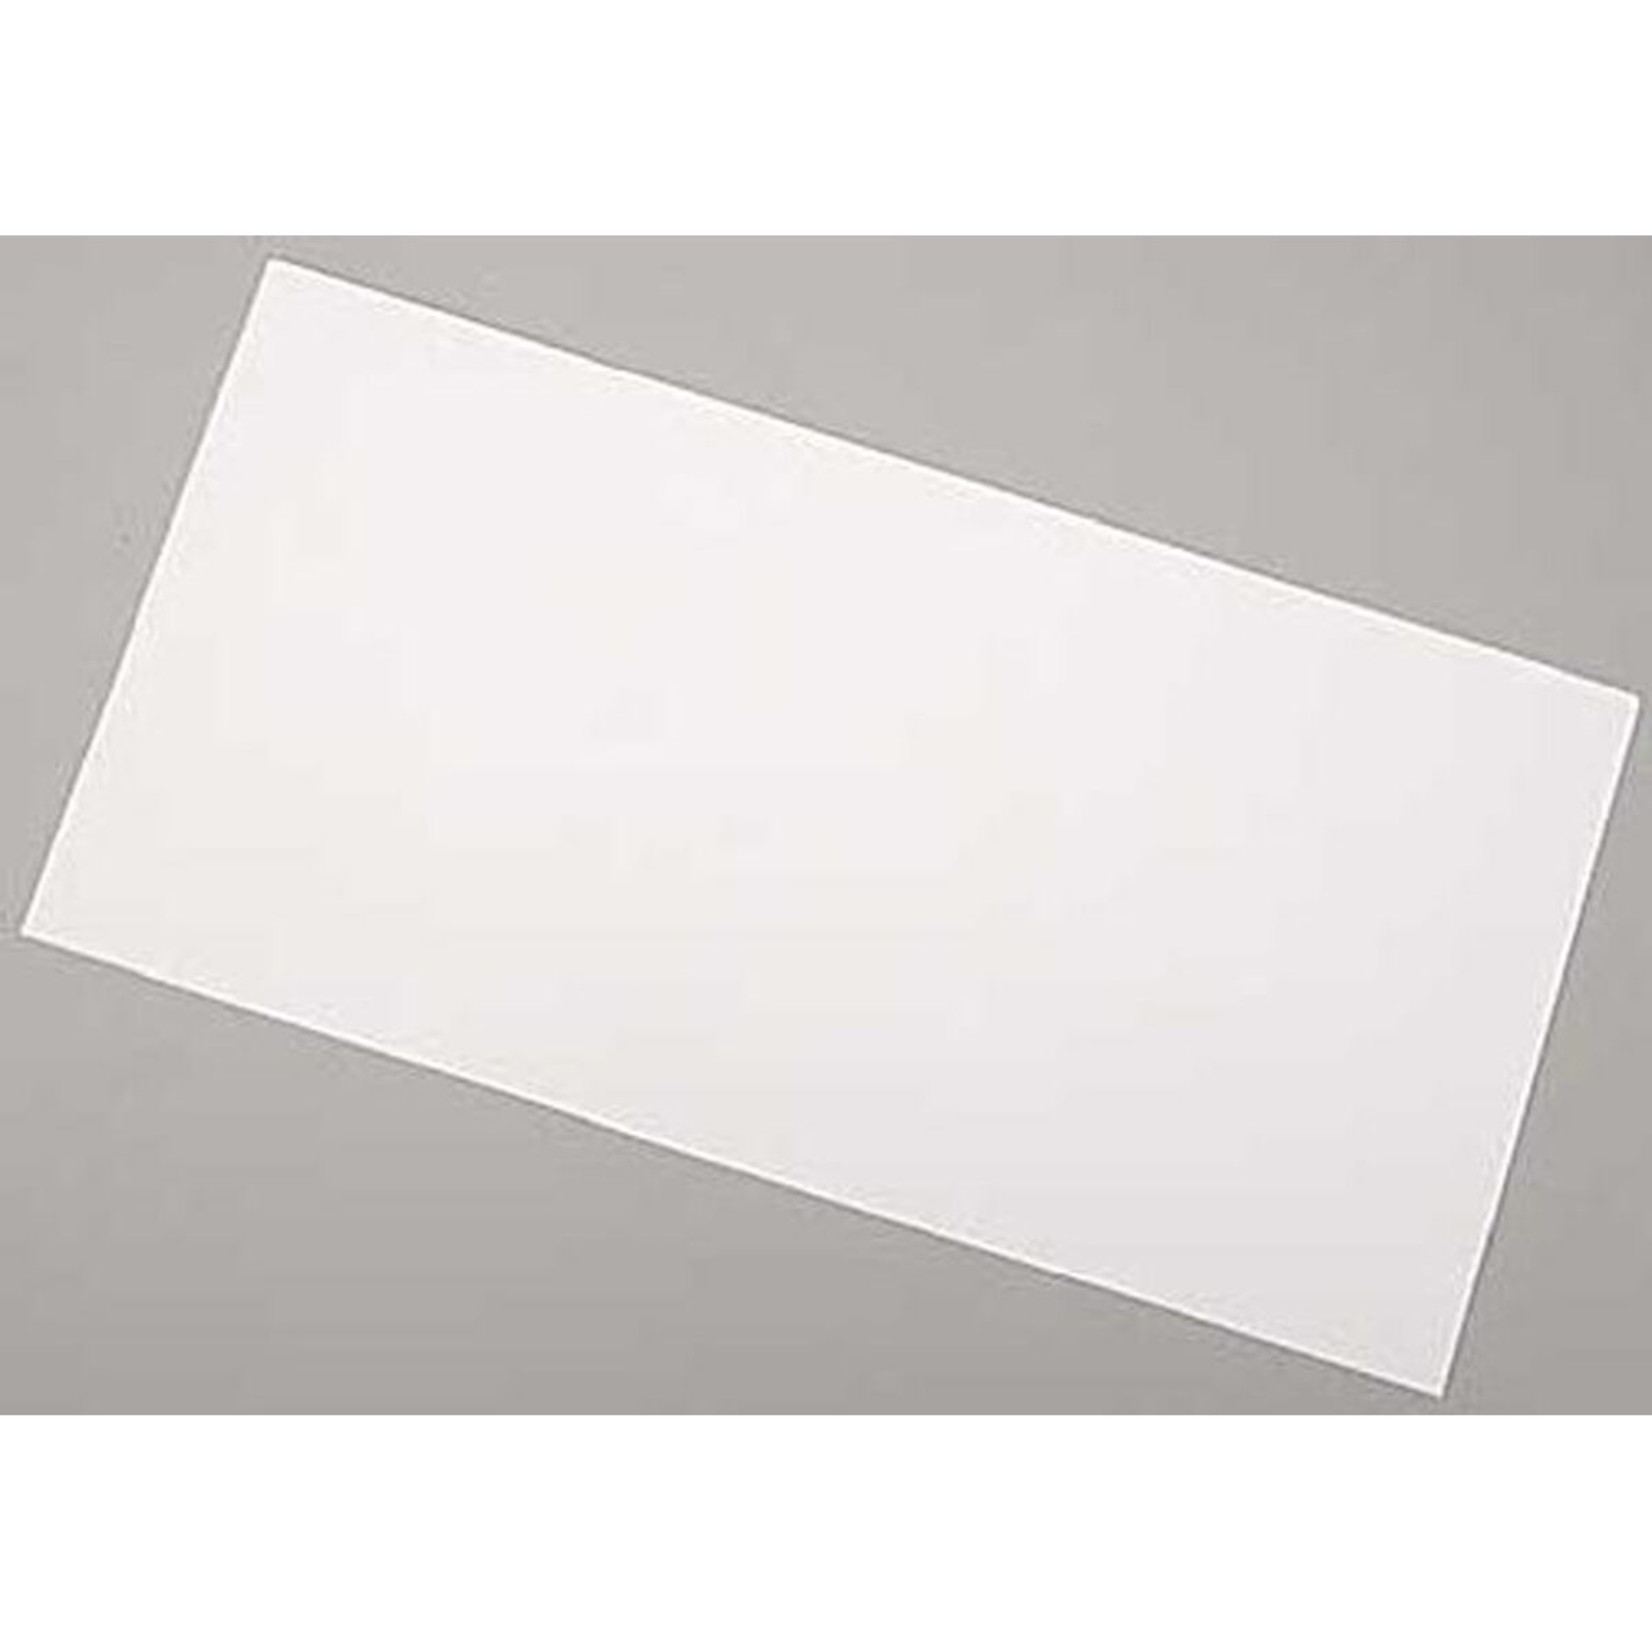 Evergreen White Sheet .005 x 6 x 12 (3)